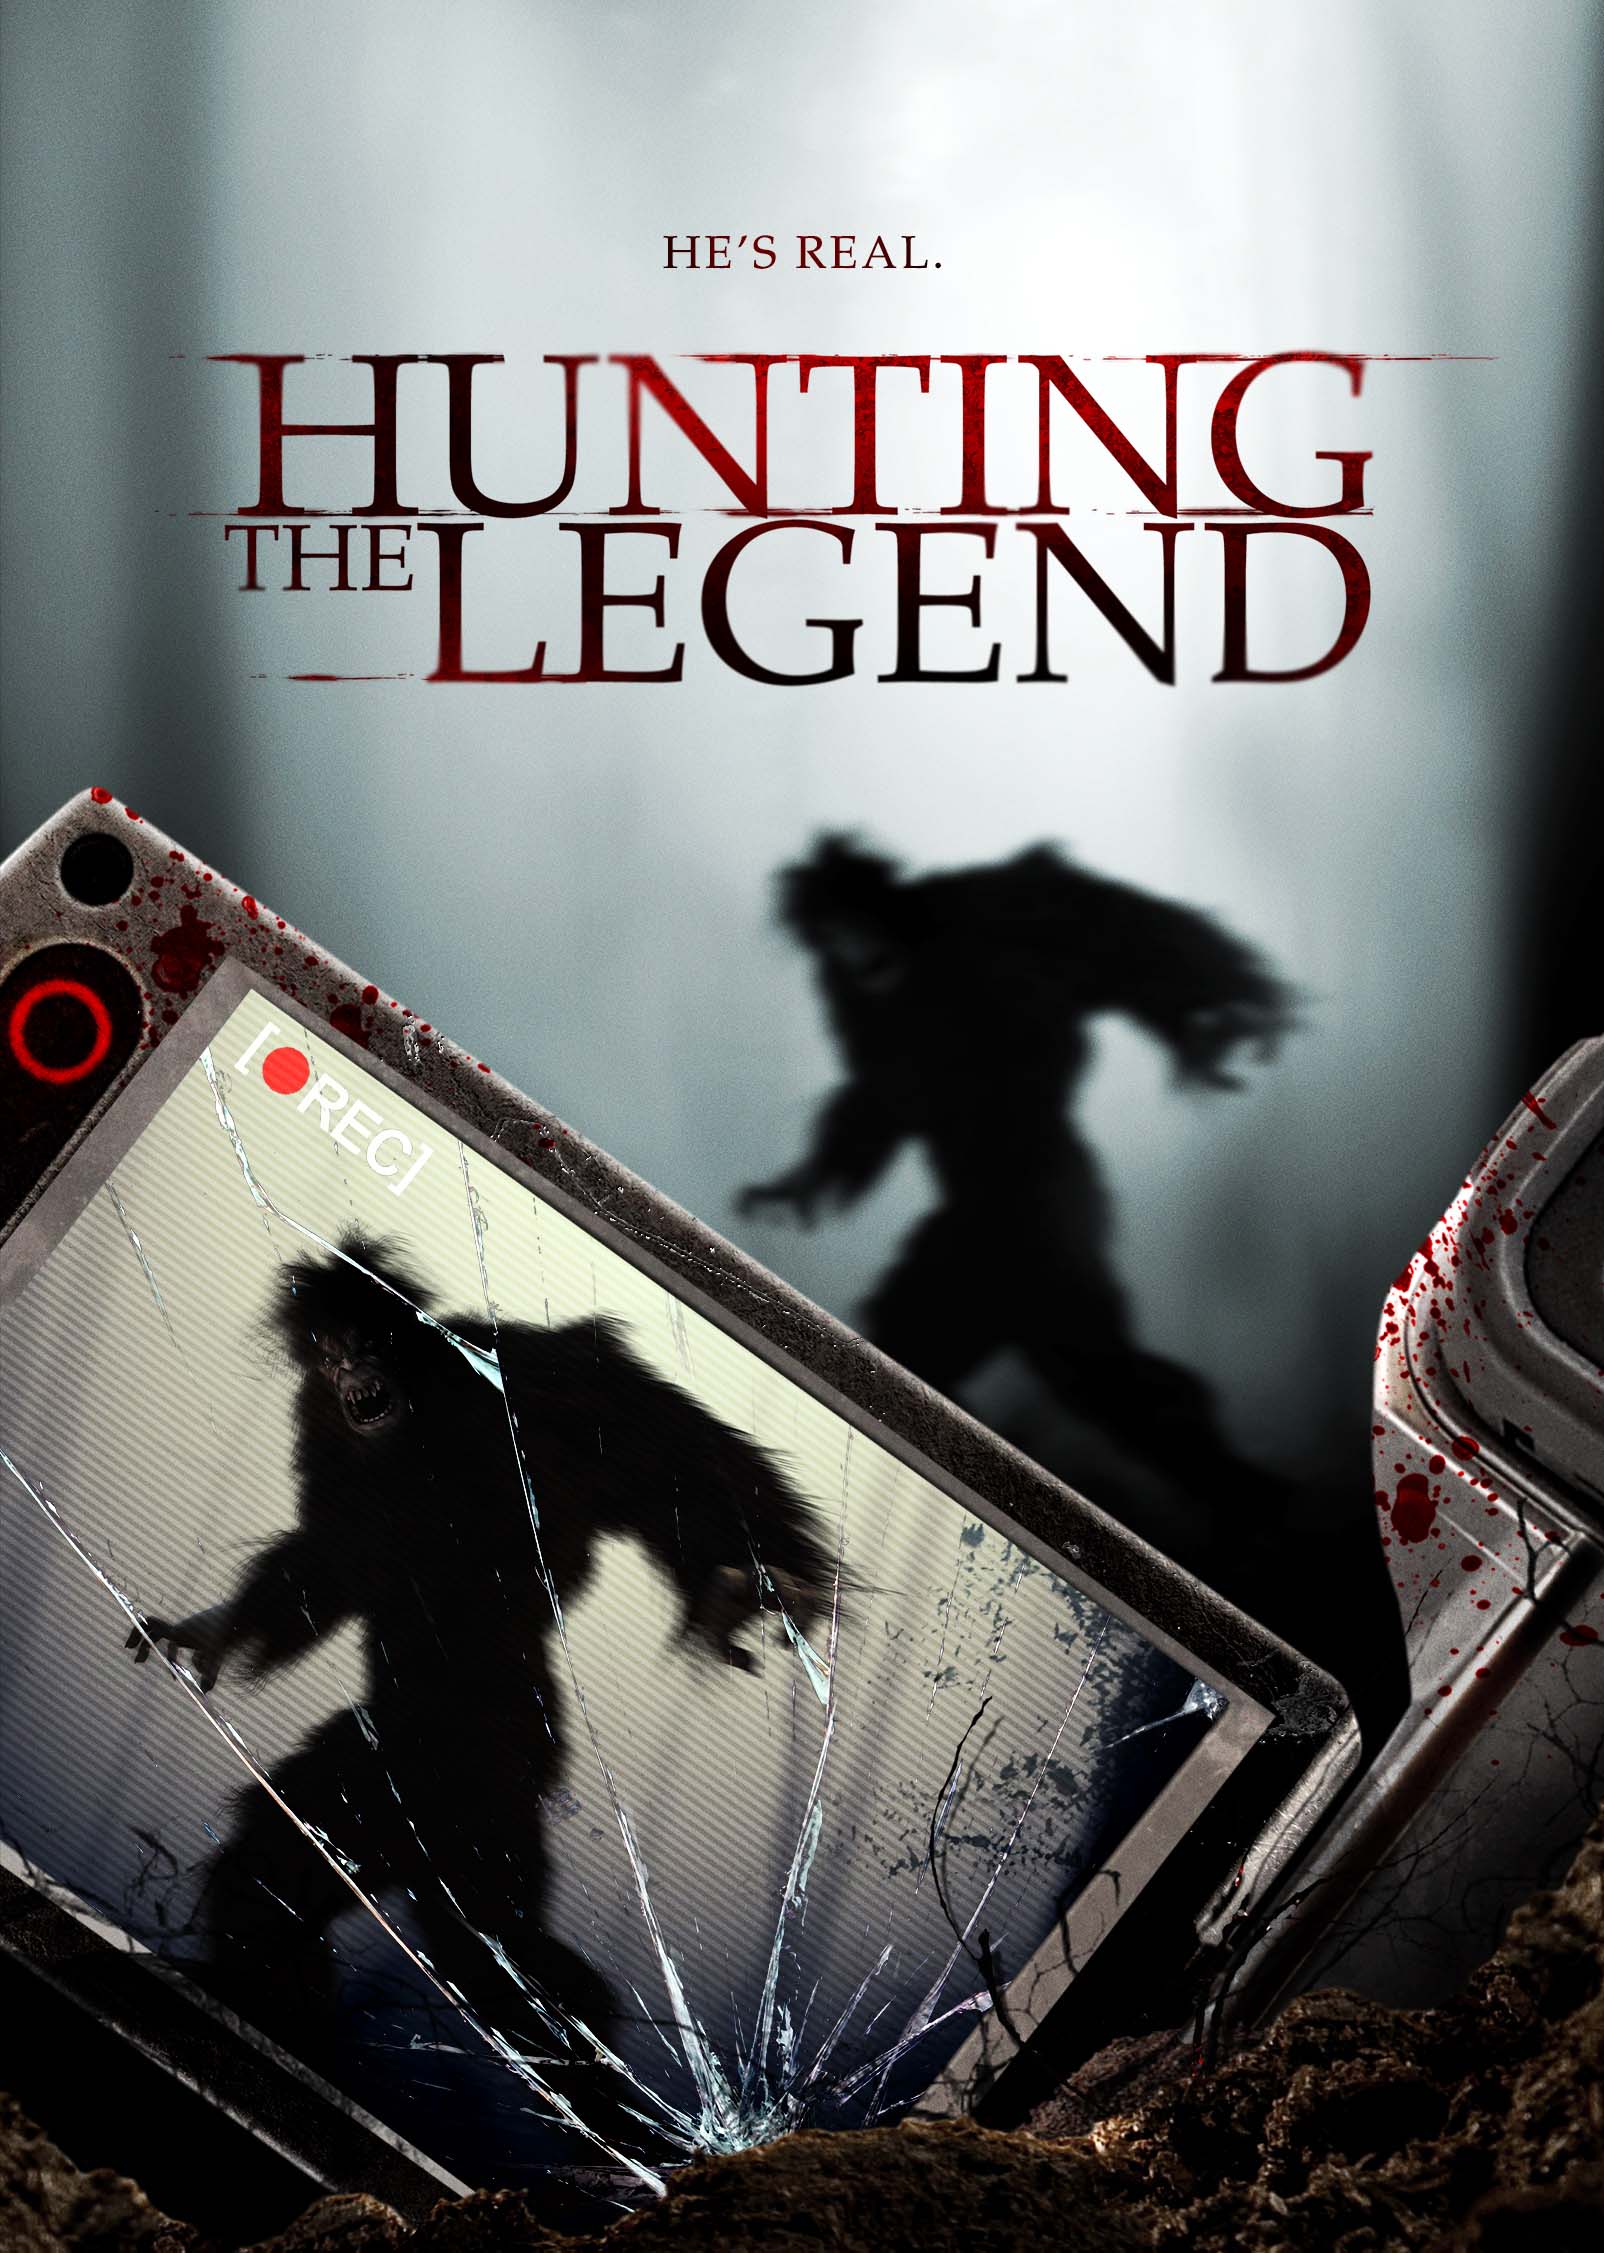 Hunting the Legend (2014) ล่าตำนานสยอง